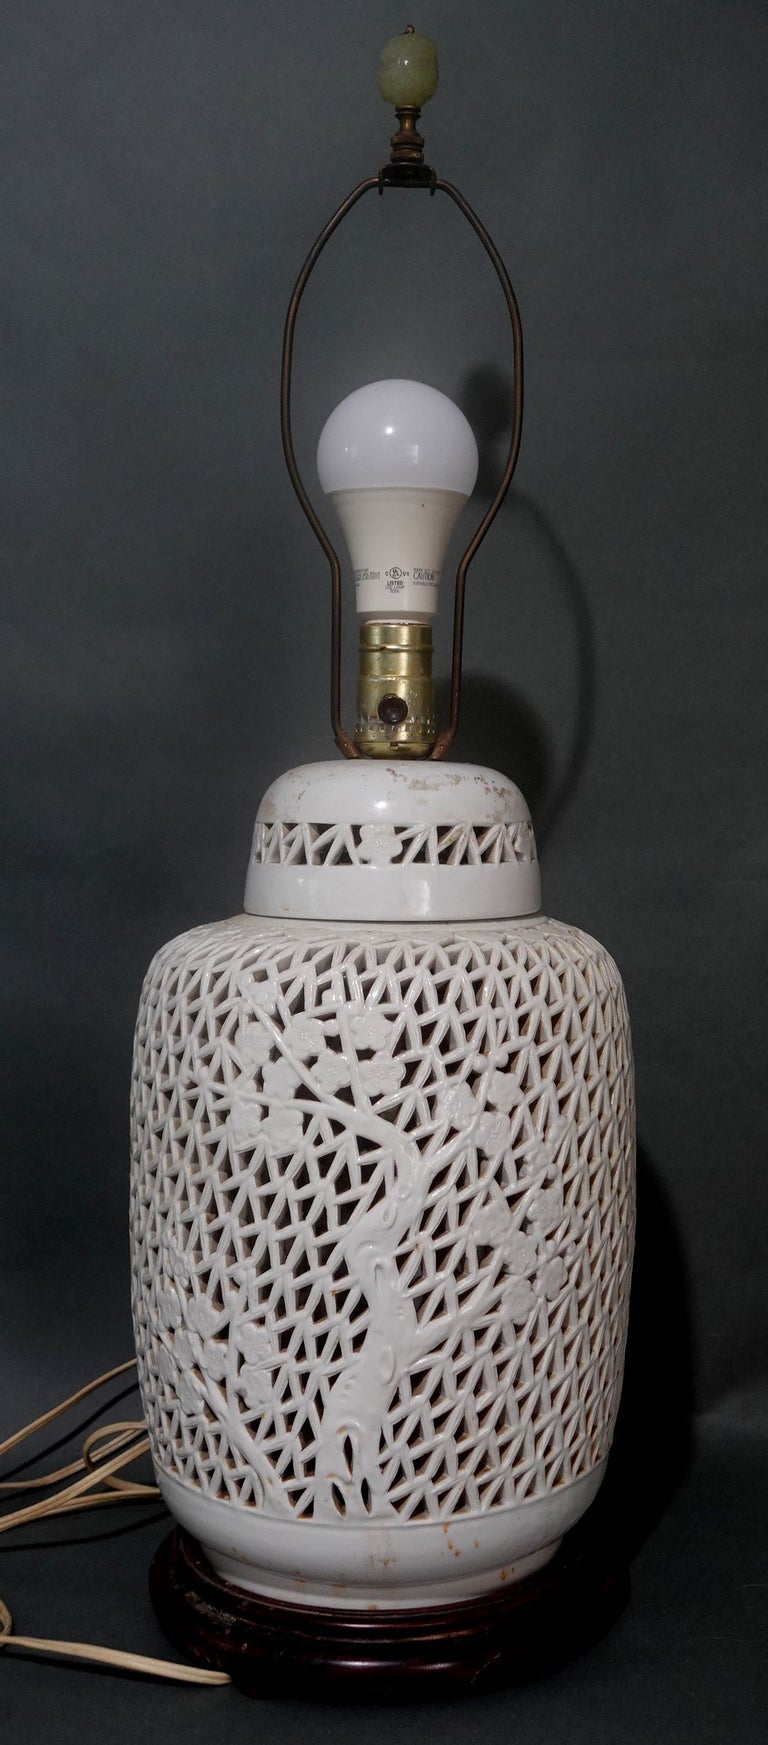 Vintage Artichoke Lamp in White Porcelain, 1970s For Sale at 1stDibs